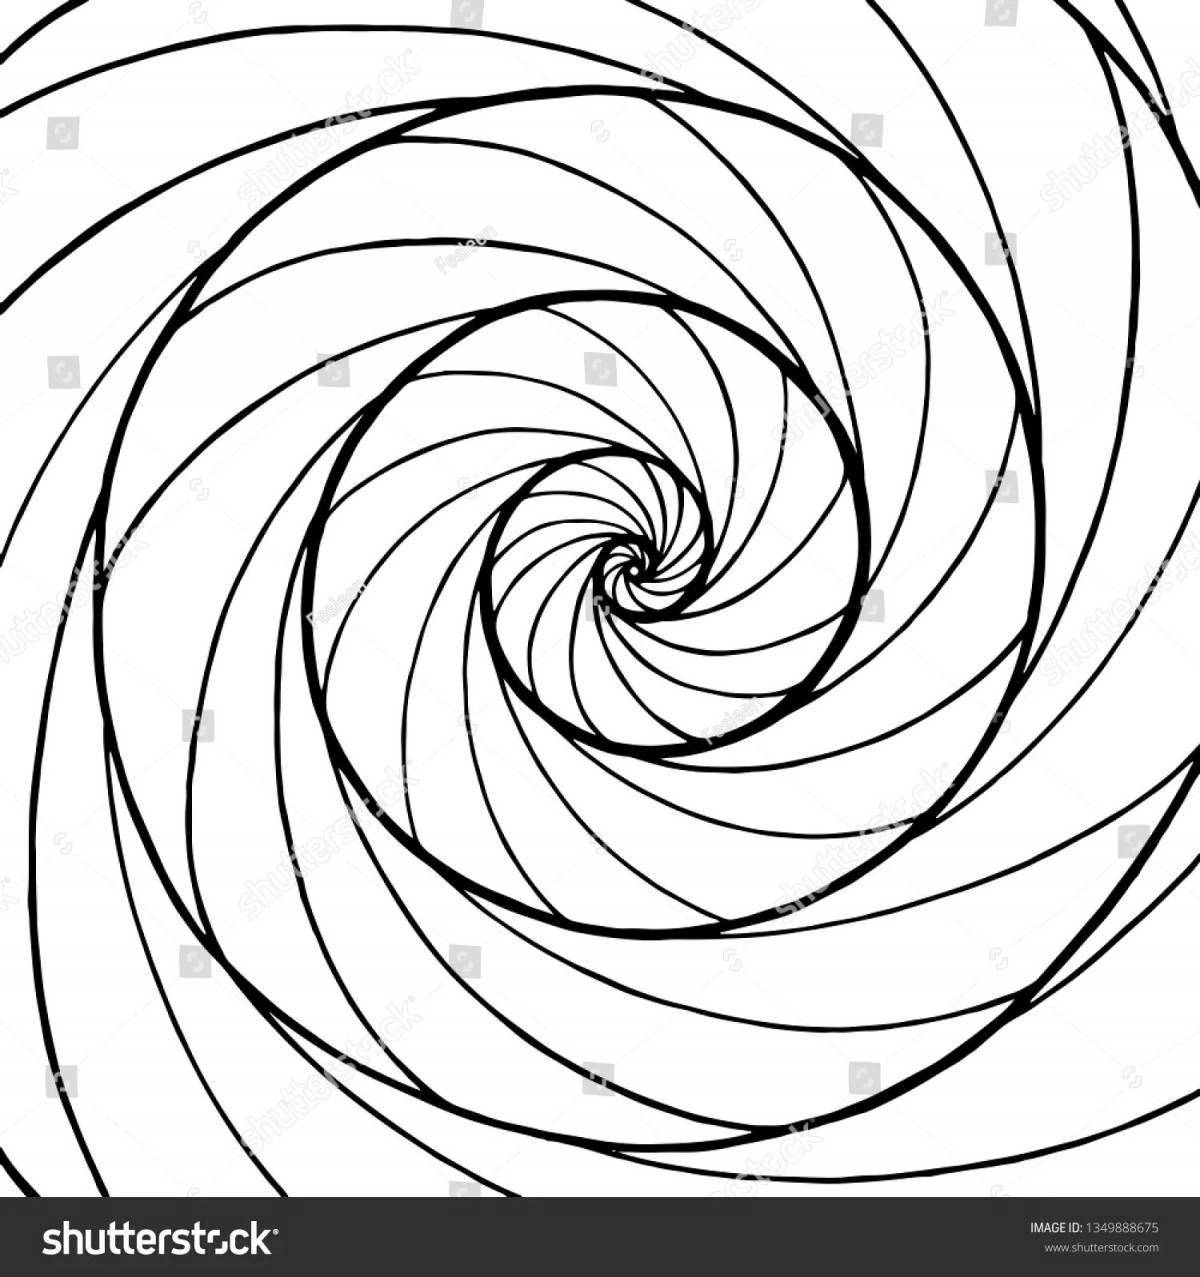 Coloring betty's joyful spiral